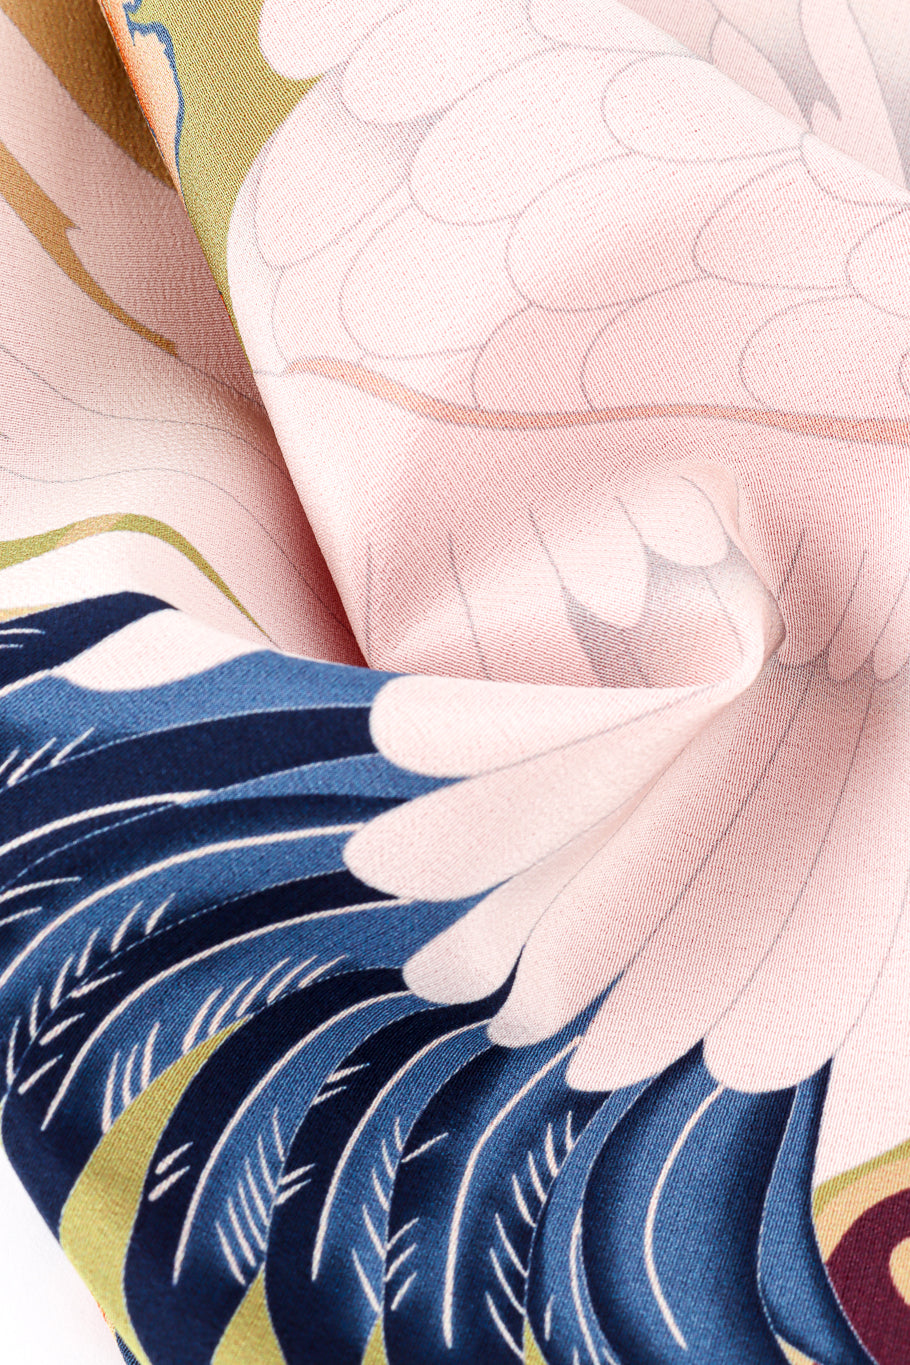 Maison Margiela 2019 S/S Japanese Crane Shirt fabric closeup @recess la